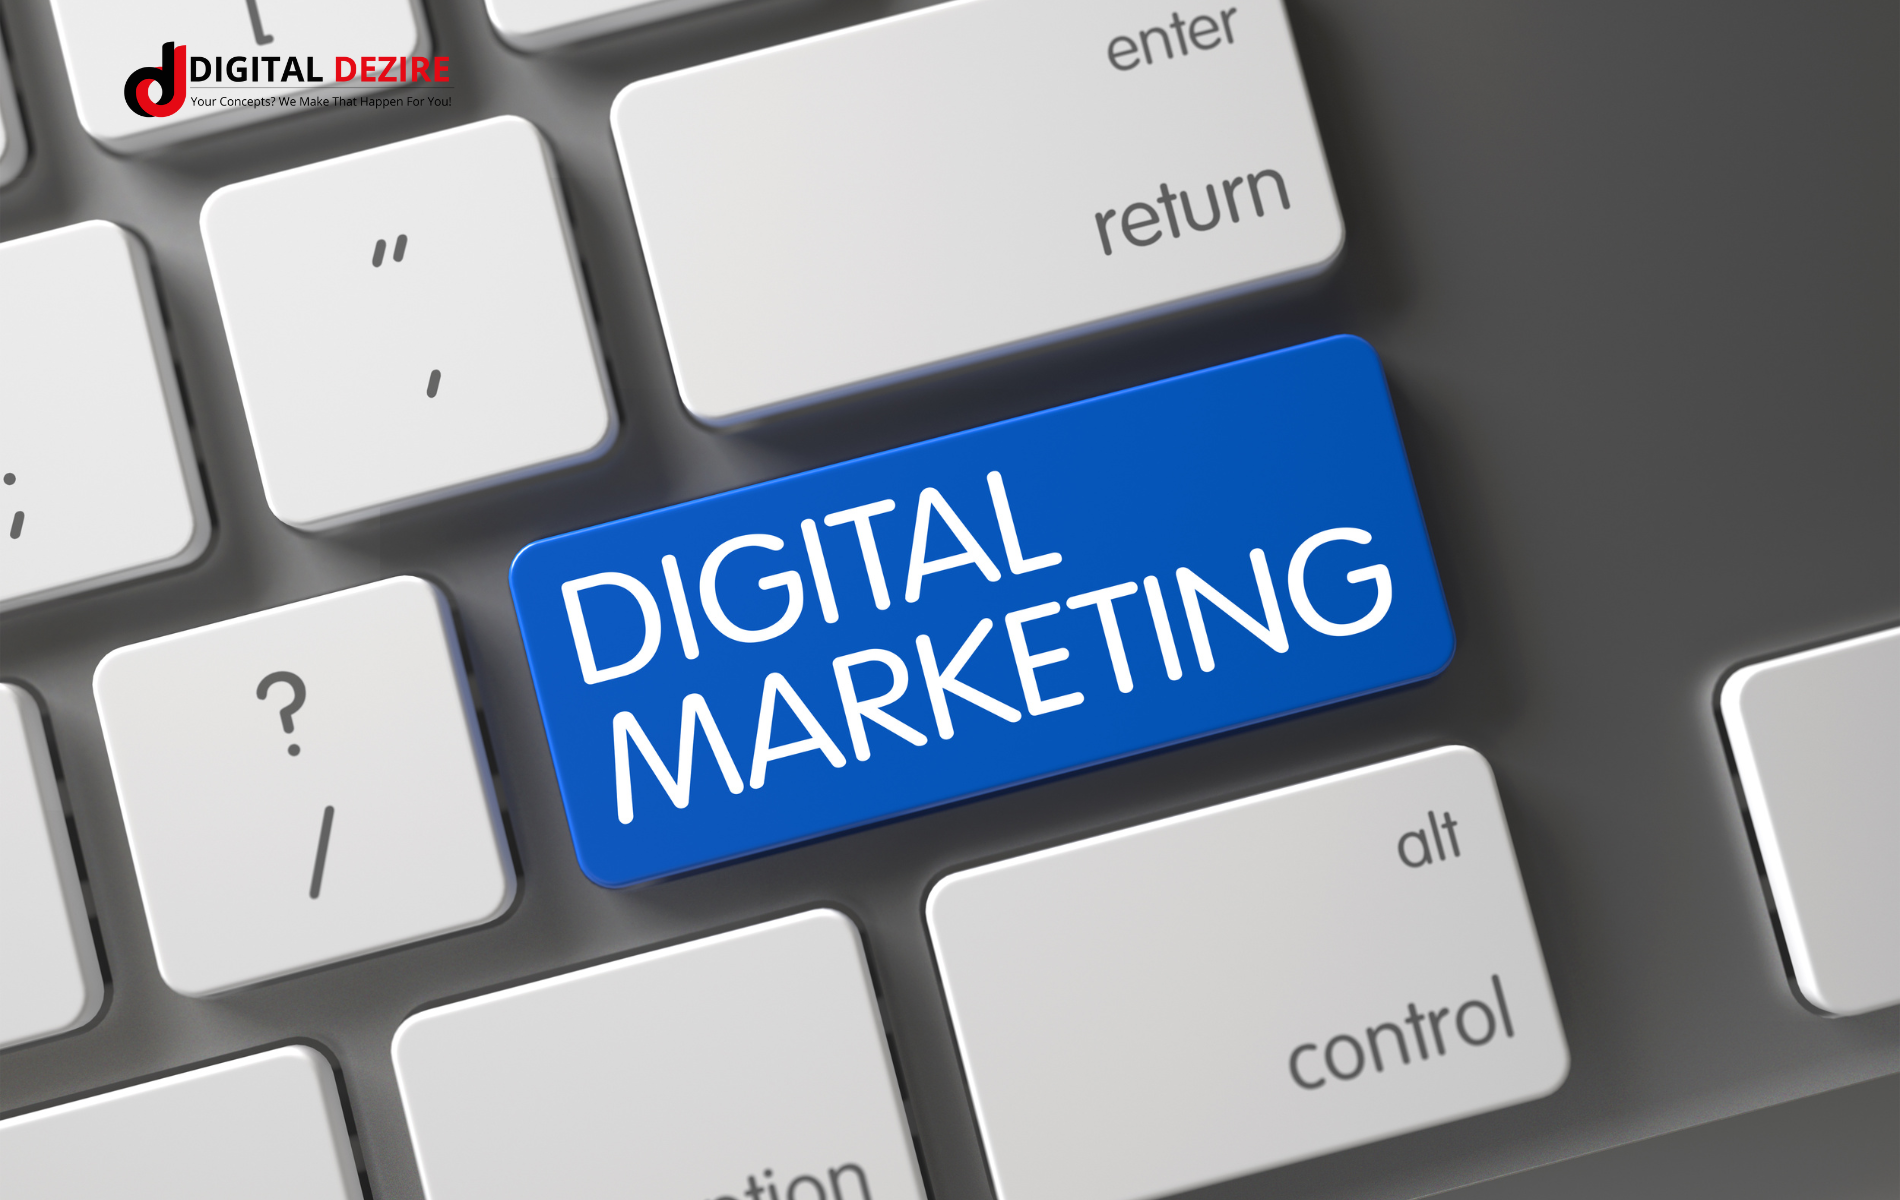 Best Digital Marketing Company in Delhi- Digital Dezire 